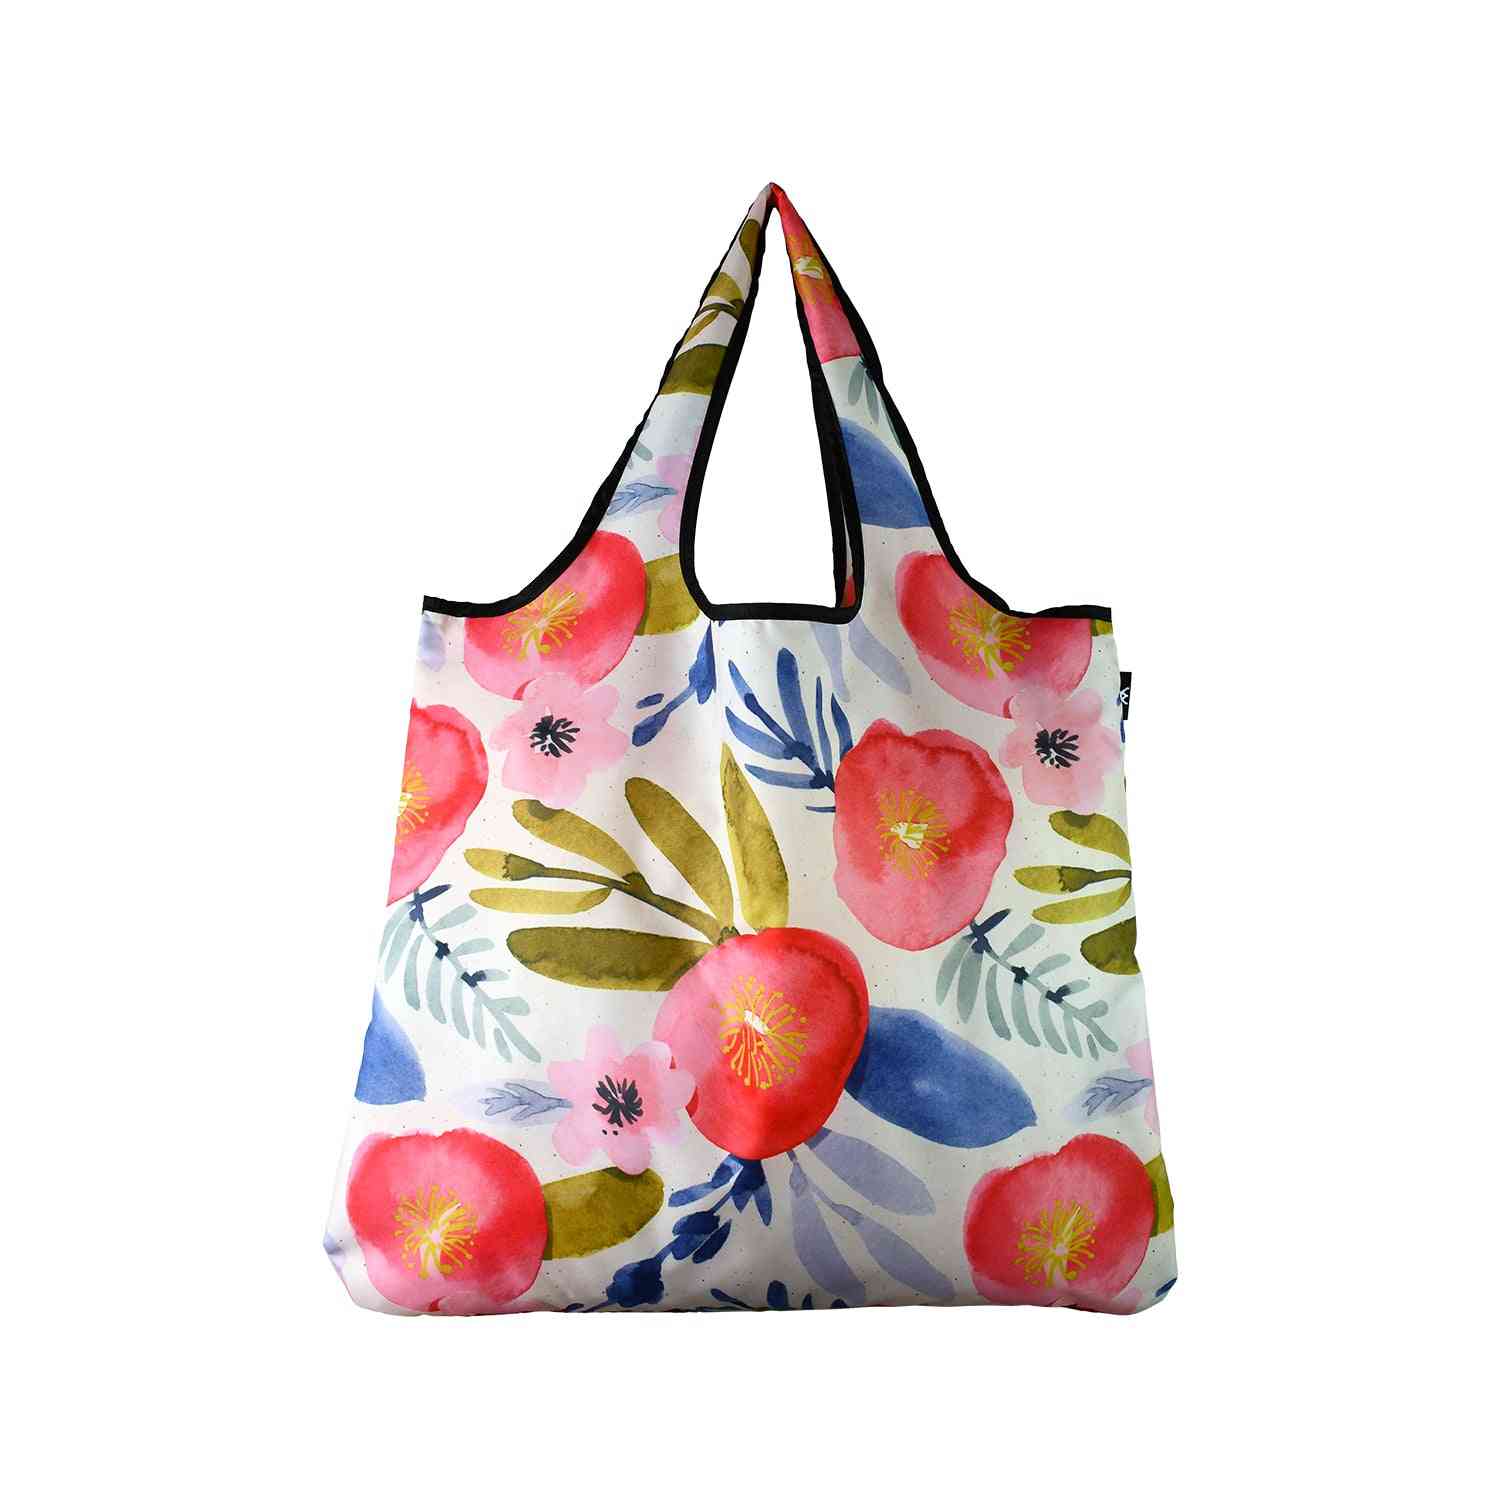 Reusable Jumbo Size Shopping Totes- Watercolor Floral